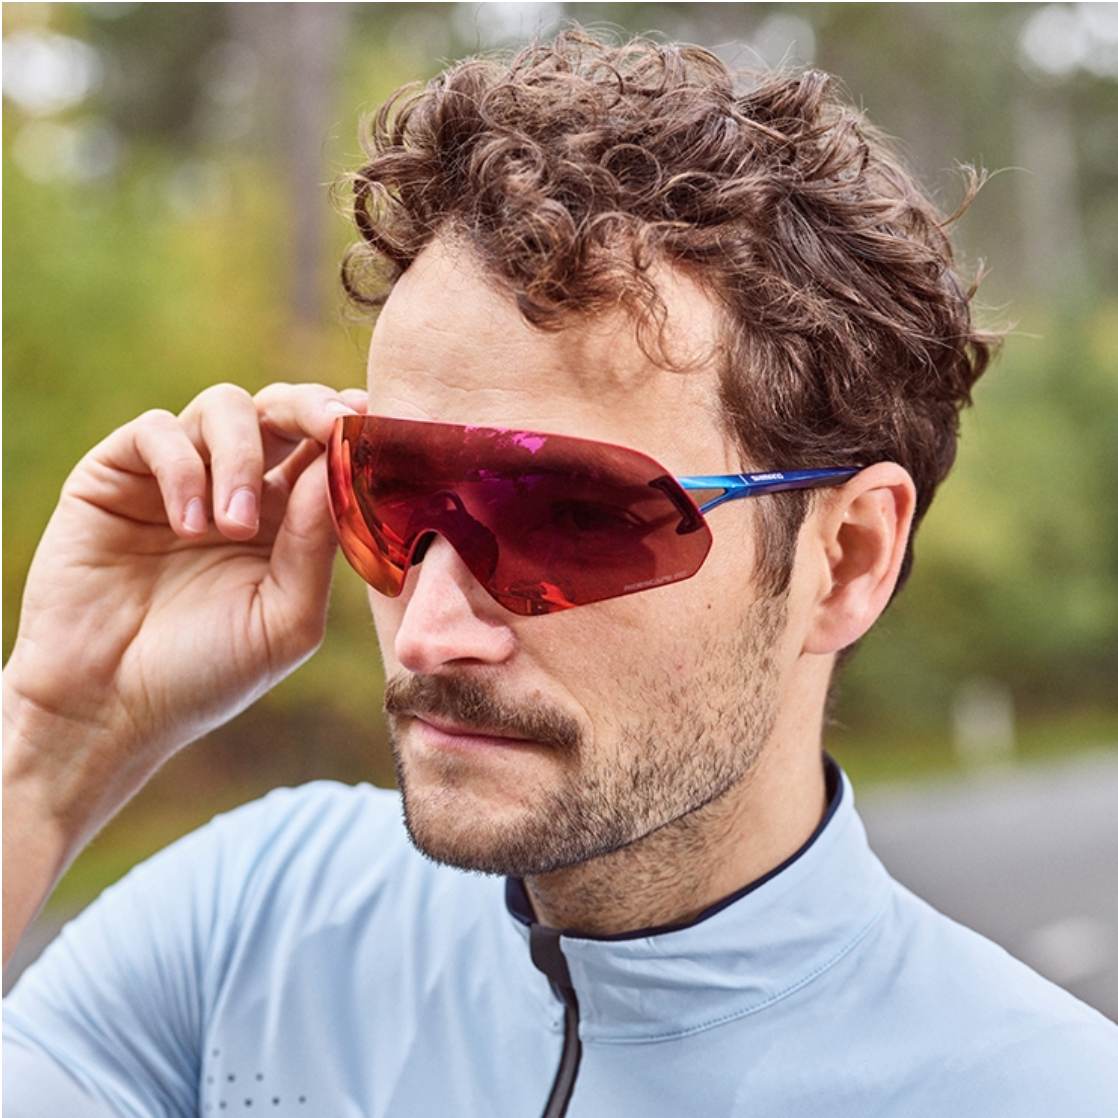 logo-embellished rectangle-frame sunglasses - Sunglasses for Runners -  Goodr Sunglasses Review